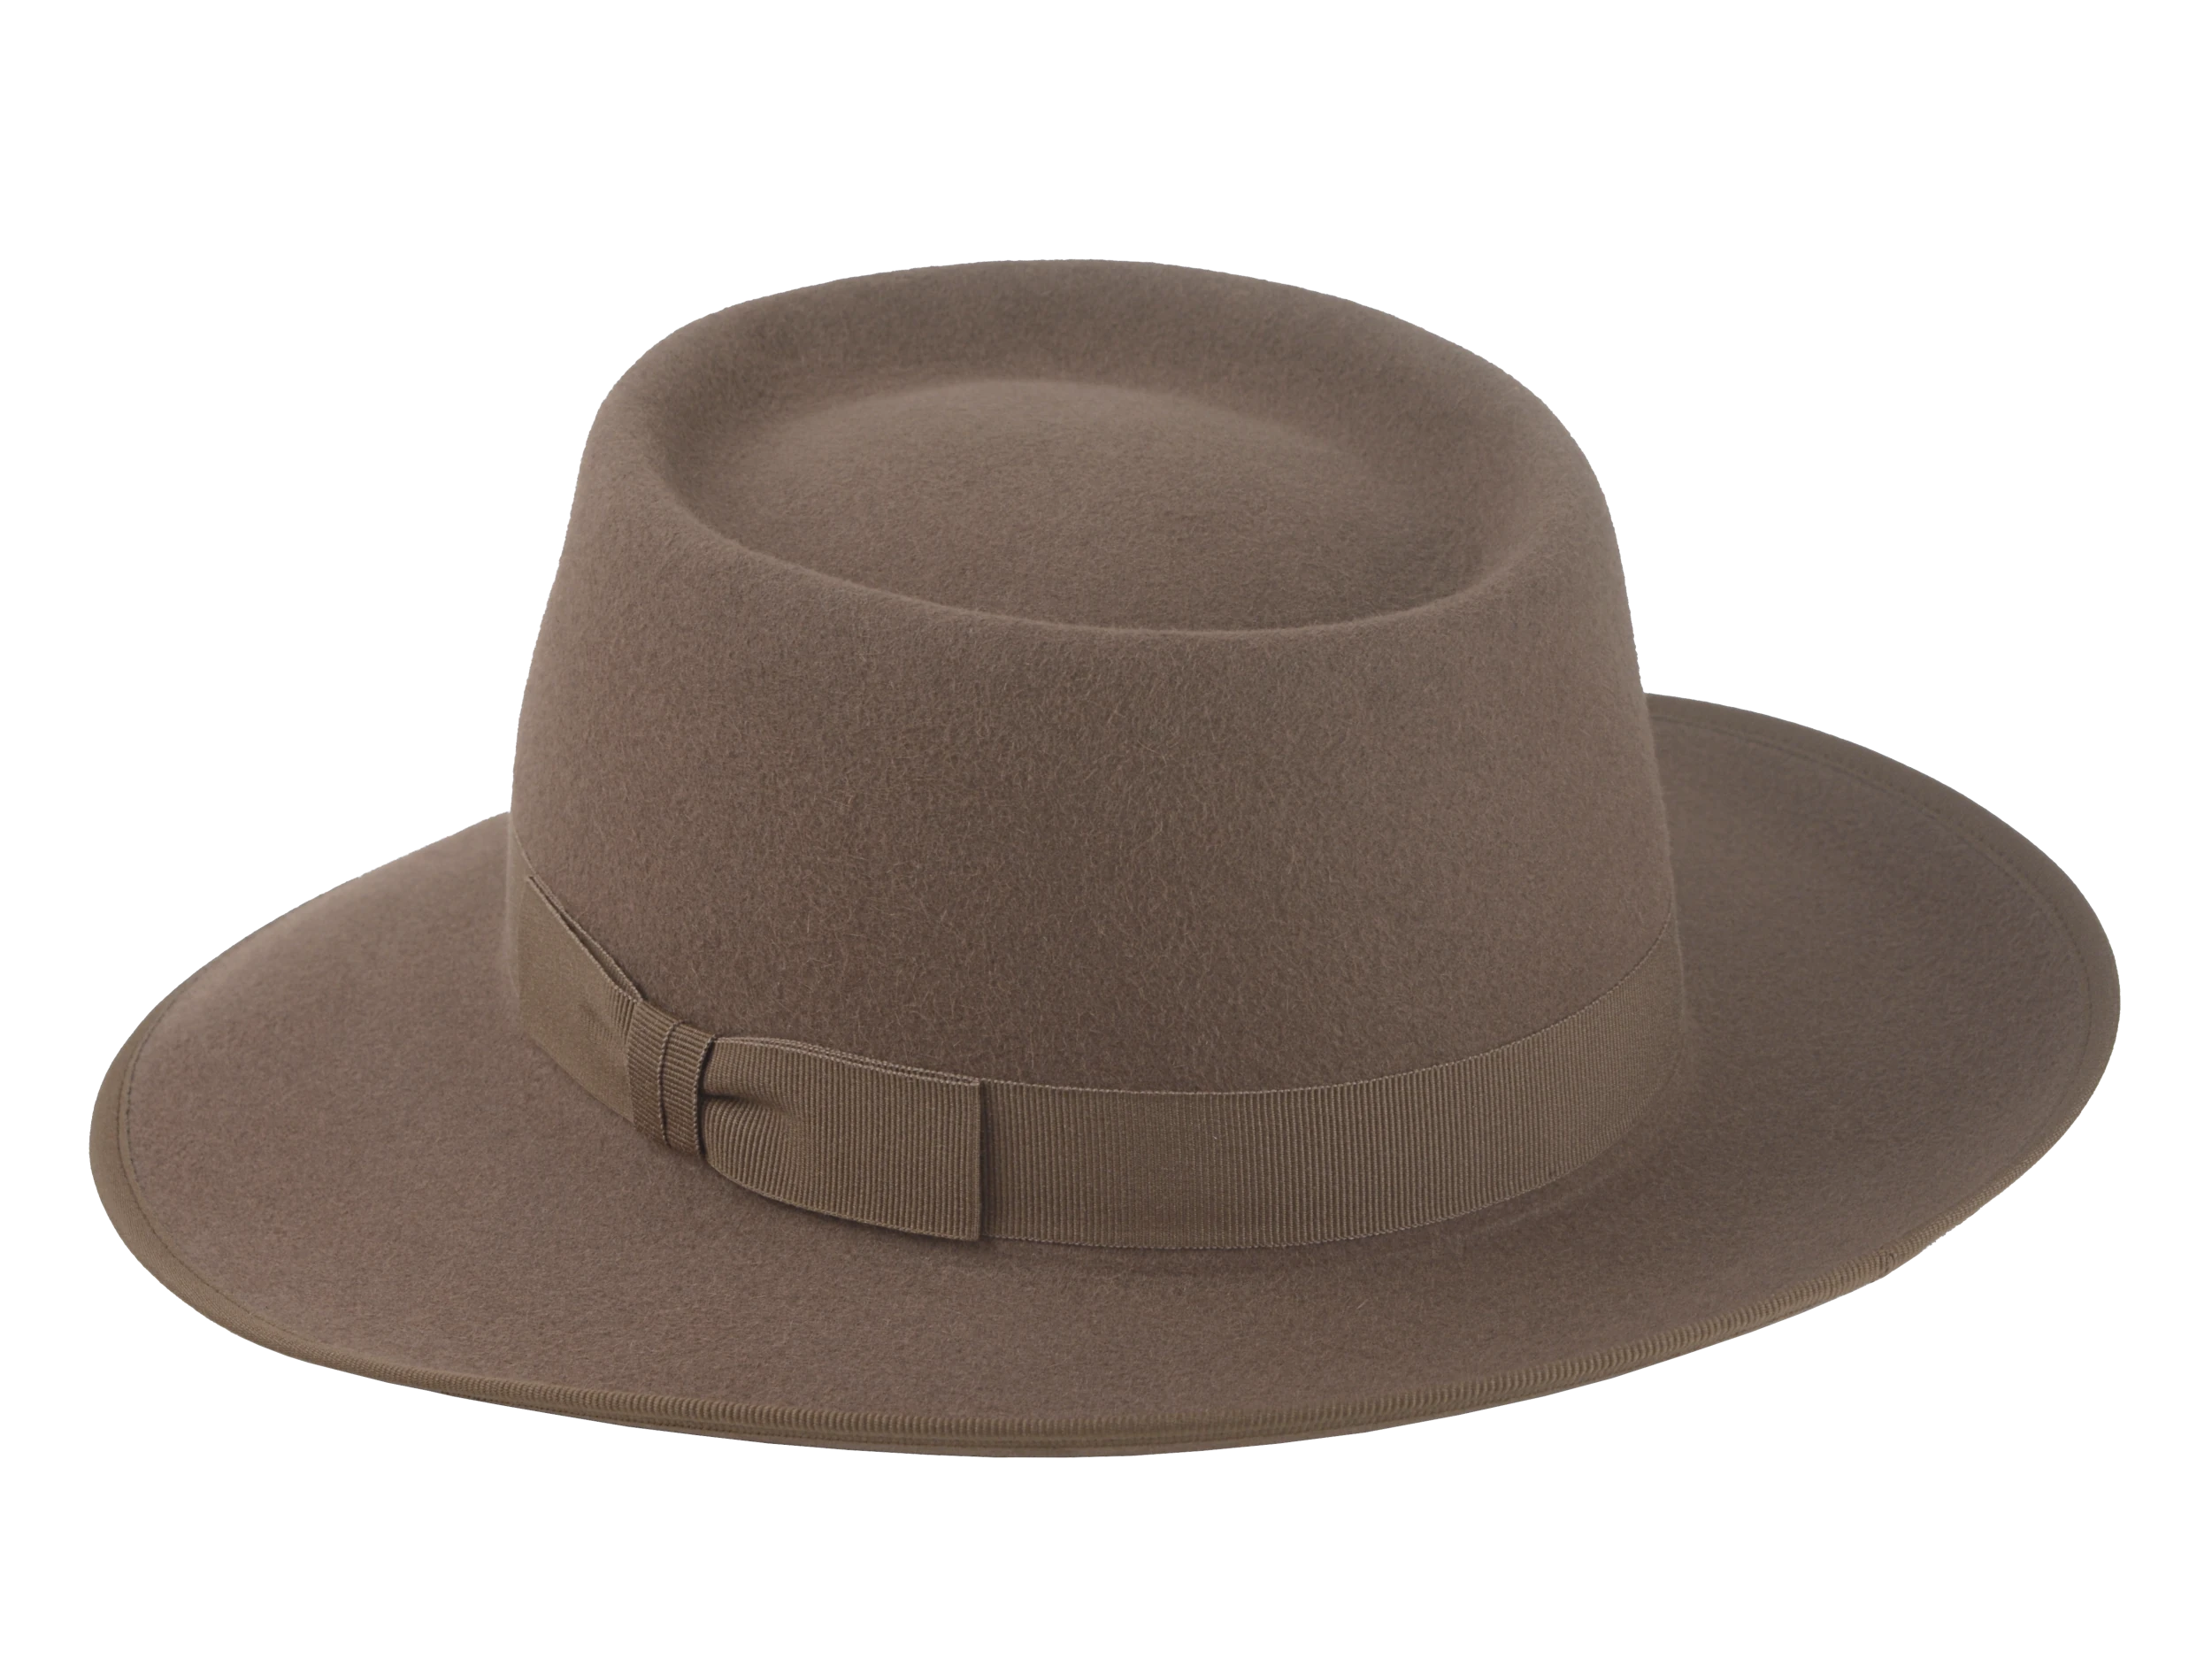 The Oppenheimer - Rabbit Fur Felt Wide Brim Porkpie Fedora For Men in Desert Taupe Brown Color | Agnoulita Quality Custom Hats 3